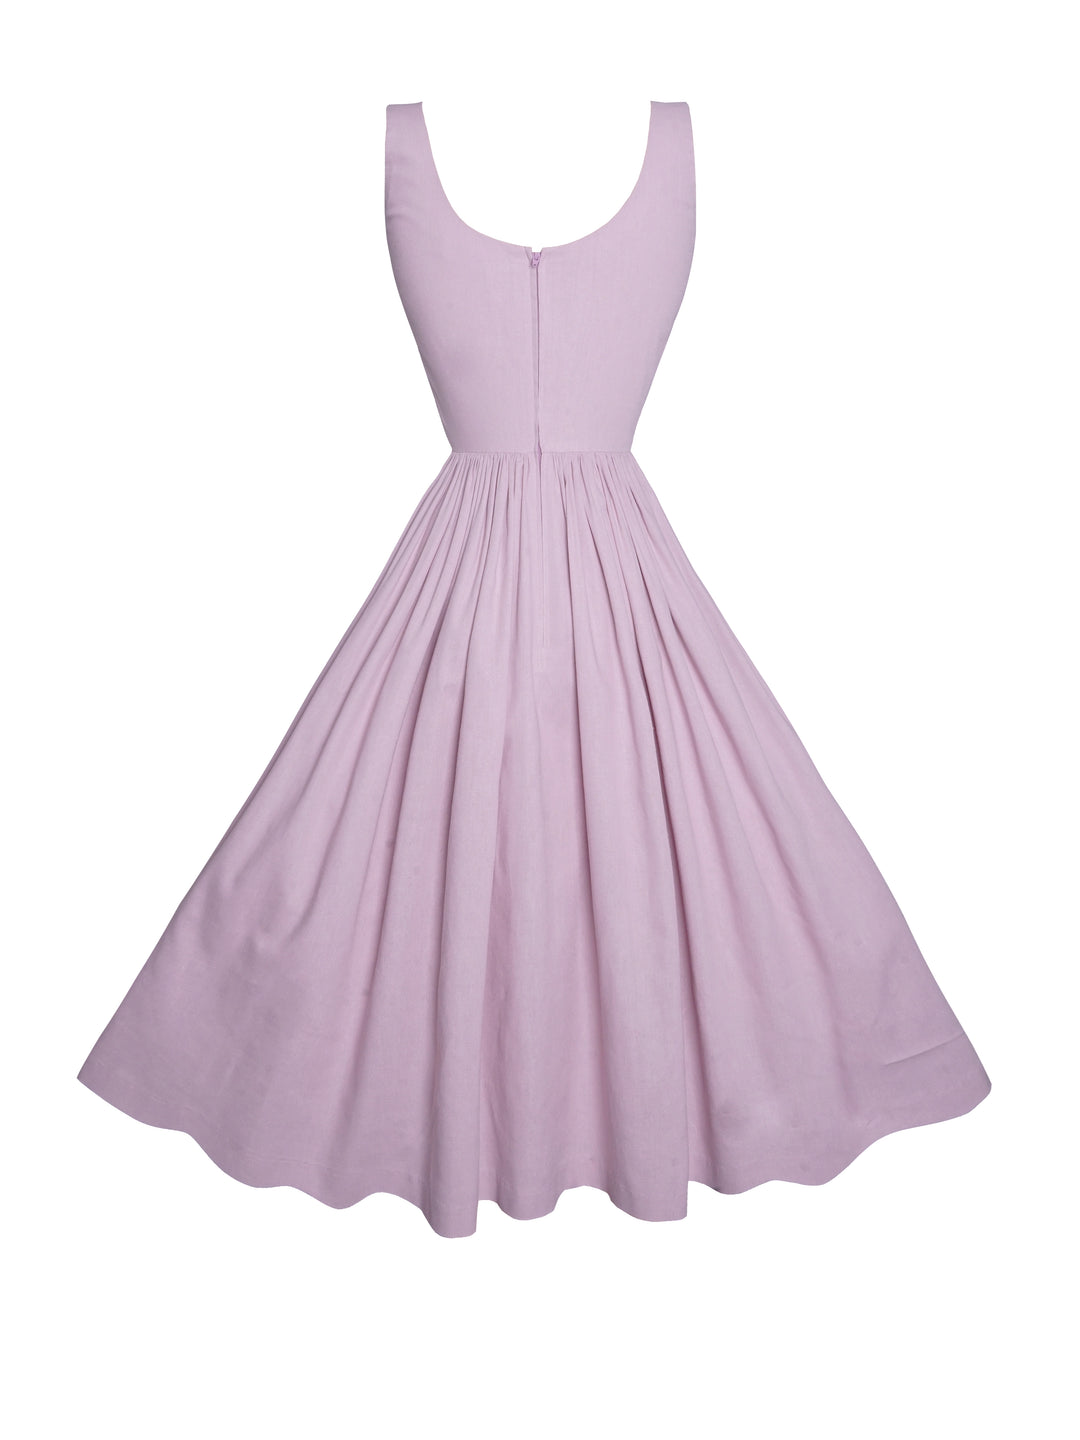 MTO - Emily Dress in Lilac Purple Linen